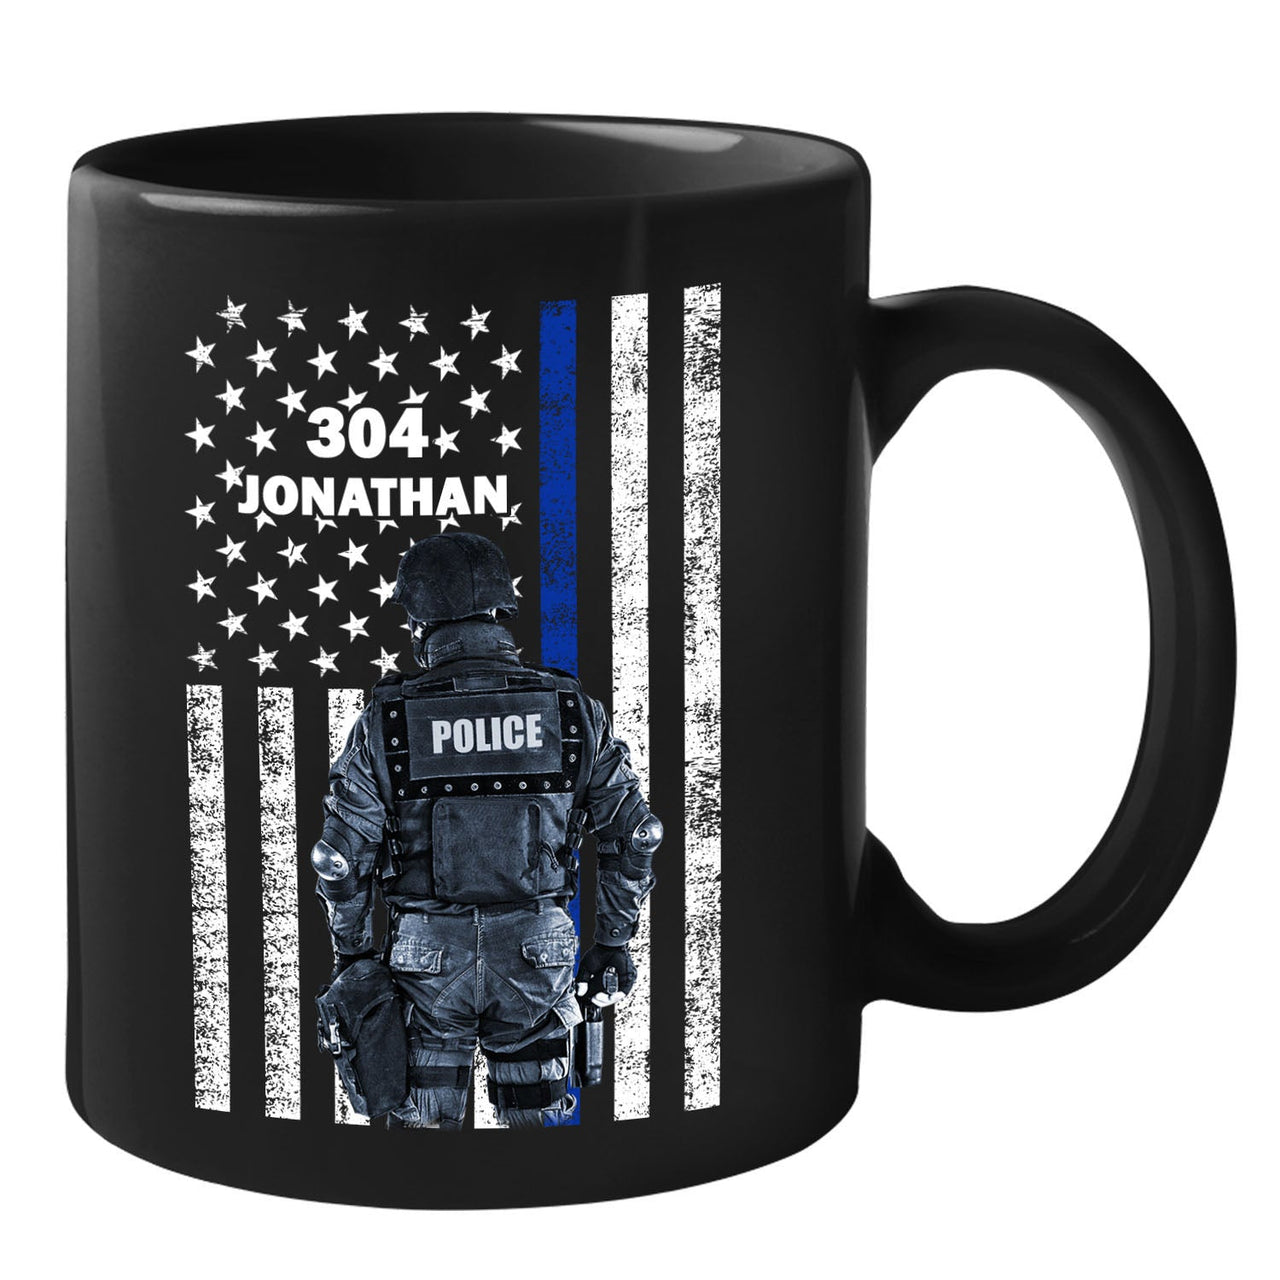 Personalized Custom Name Badge Number Policeman Police Officer Thin Blue Line Lives Matter Back Law Enforcement American Flag First Responder Ceramic Coffee Tea Mug 11 - 15 oz Cup.